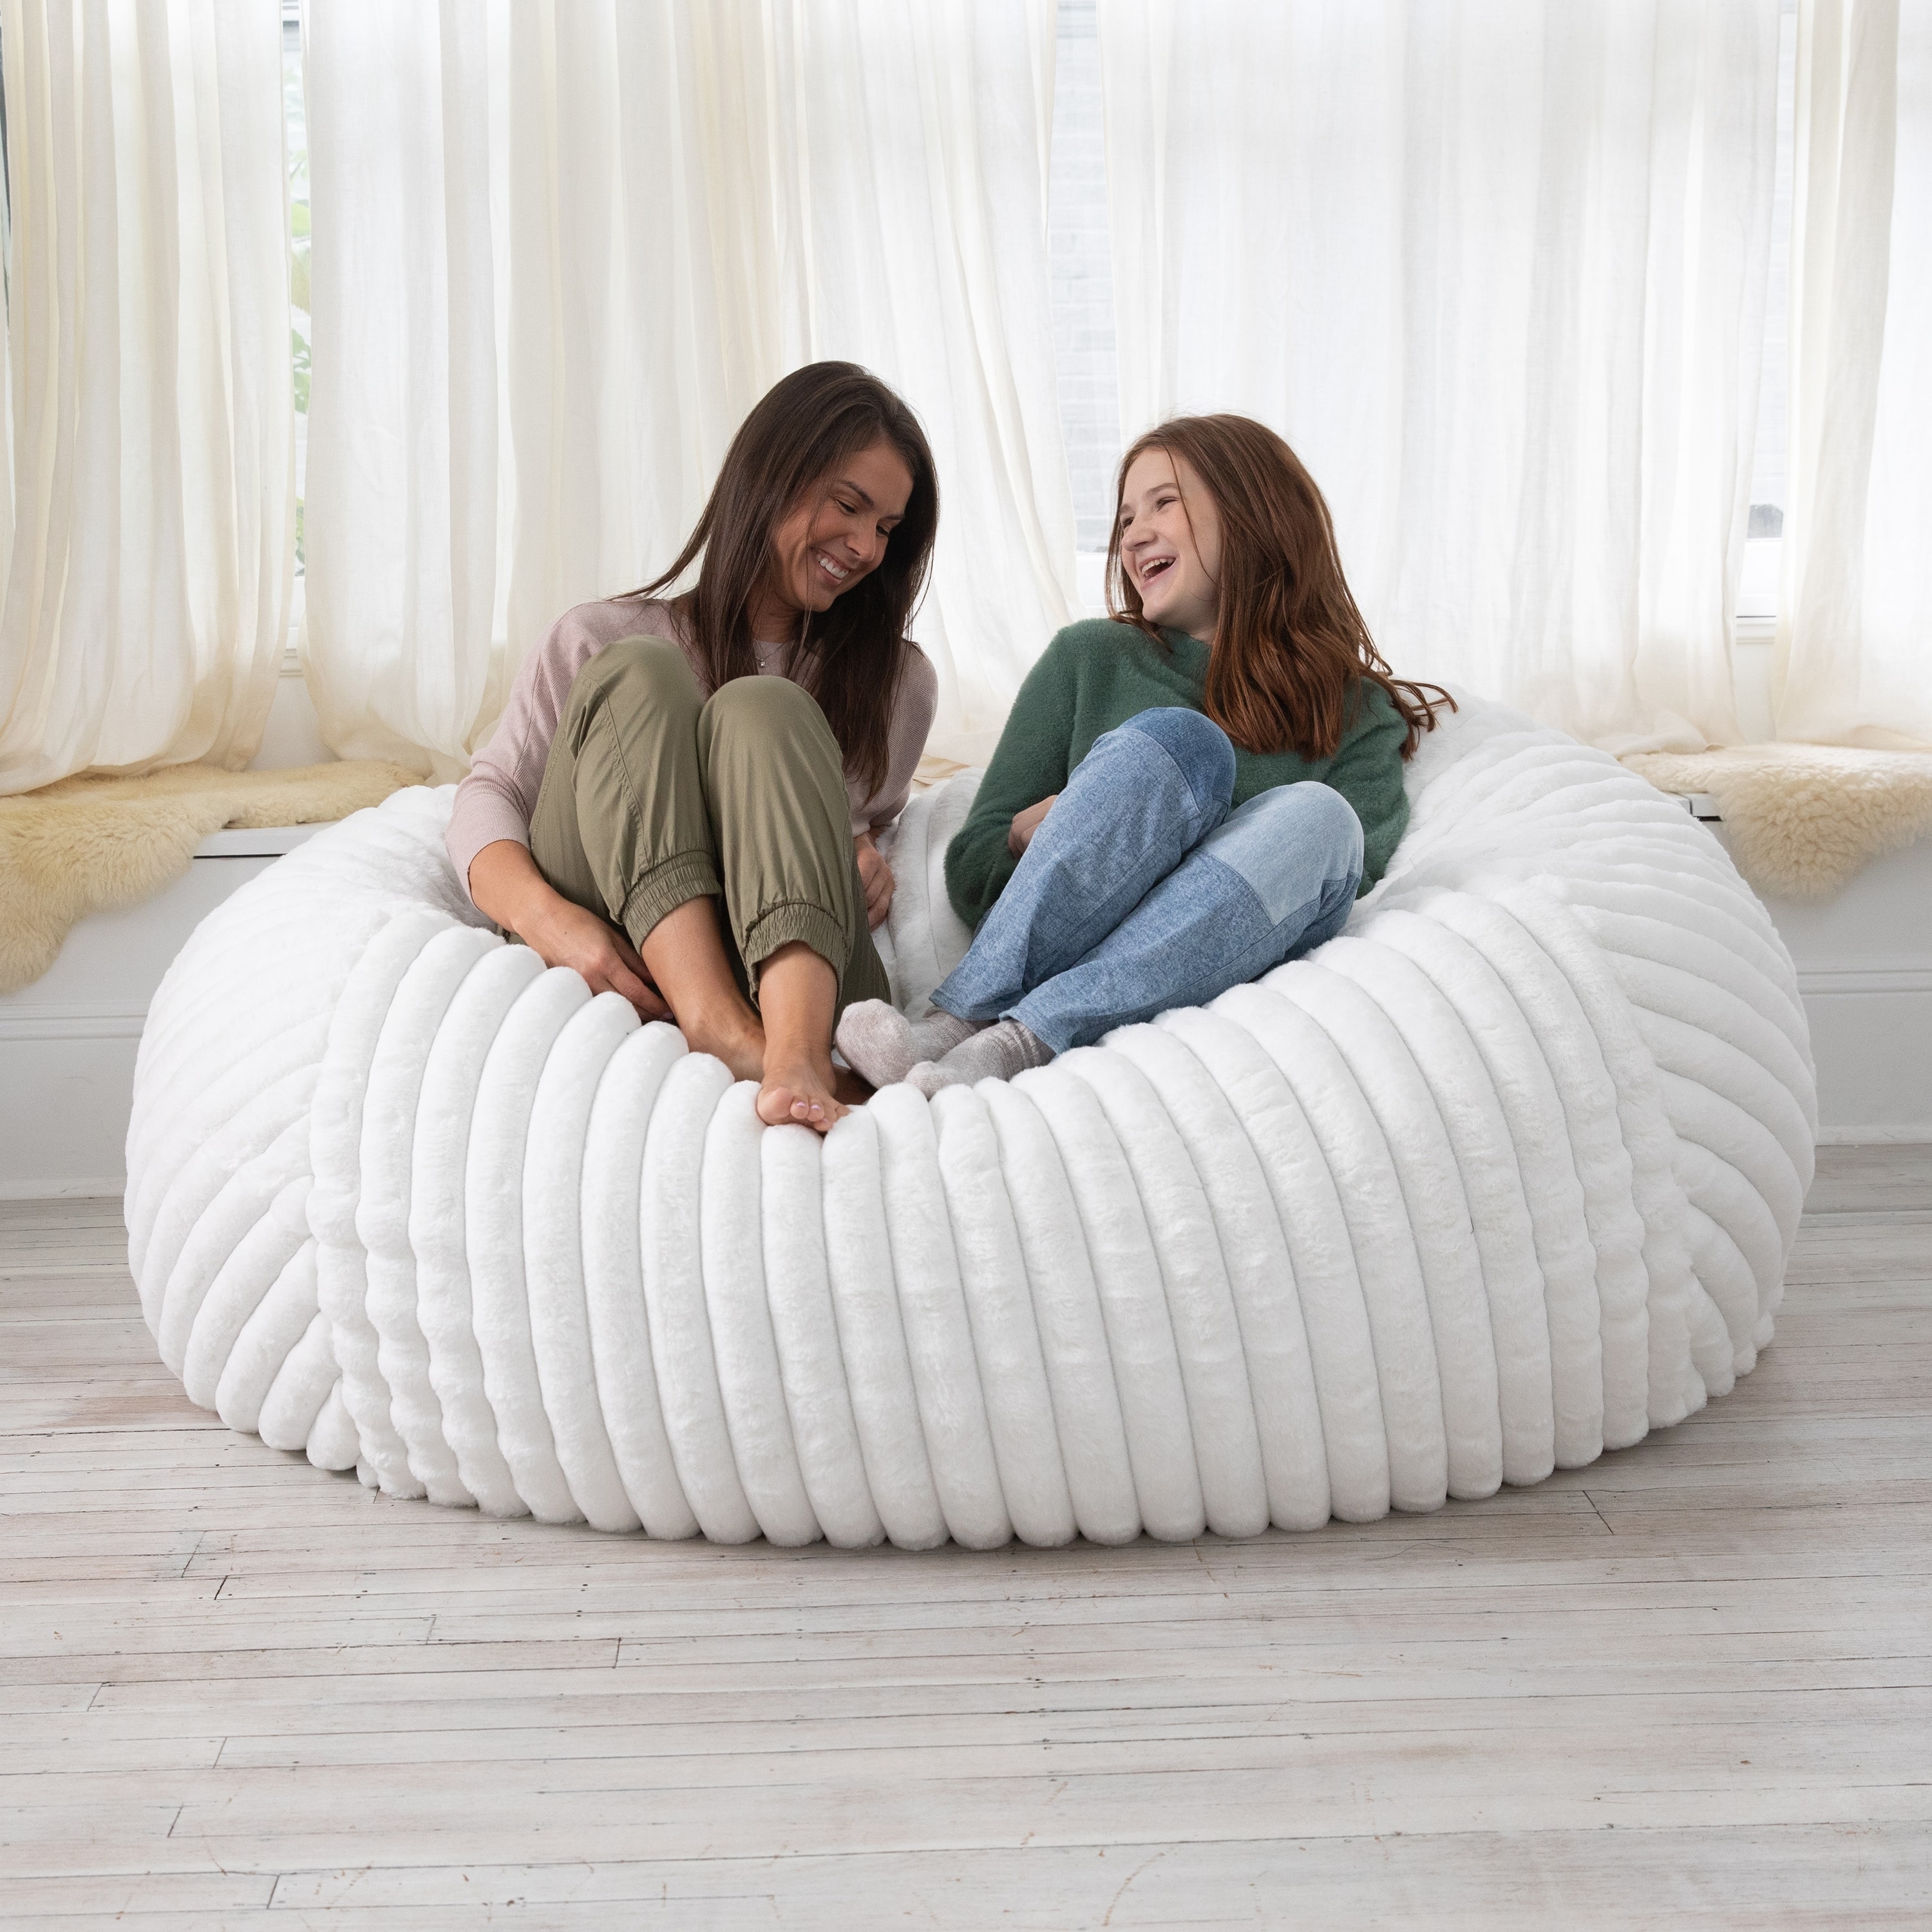 New Big XXL Bean Bag Sofa Bed Pouf No Filling Stuffed Giant Beanbag Ottoman  Relax Lounge Chair Tatami Futon Floor Seat Furniture